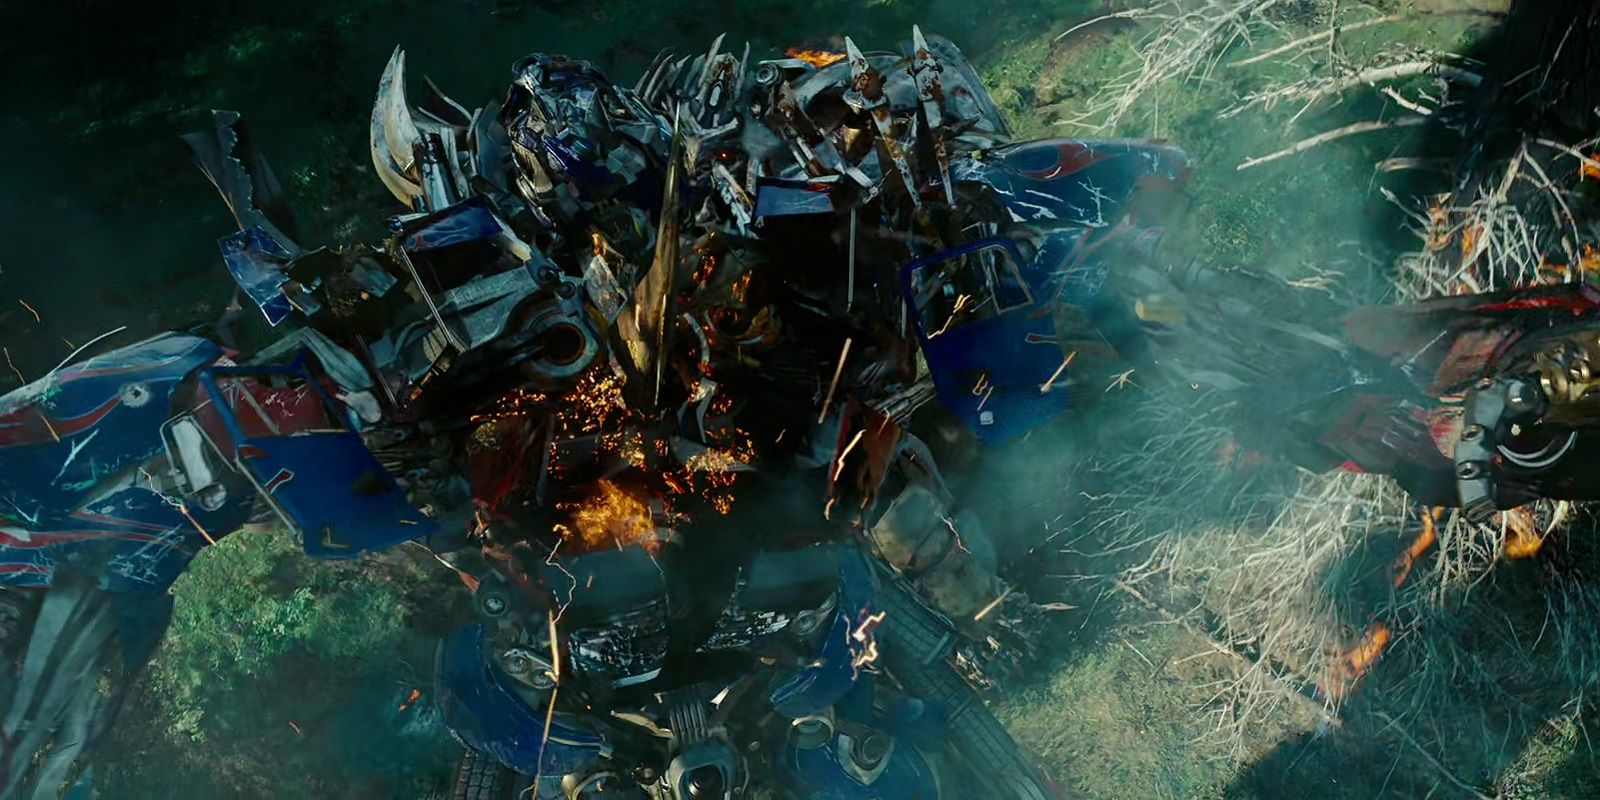 Megatron fights Optimus Prime in Revenge Of The Fallen 